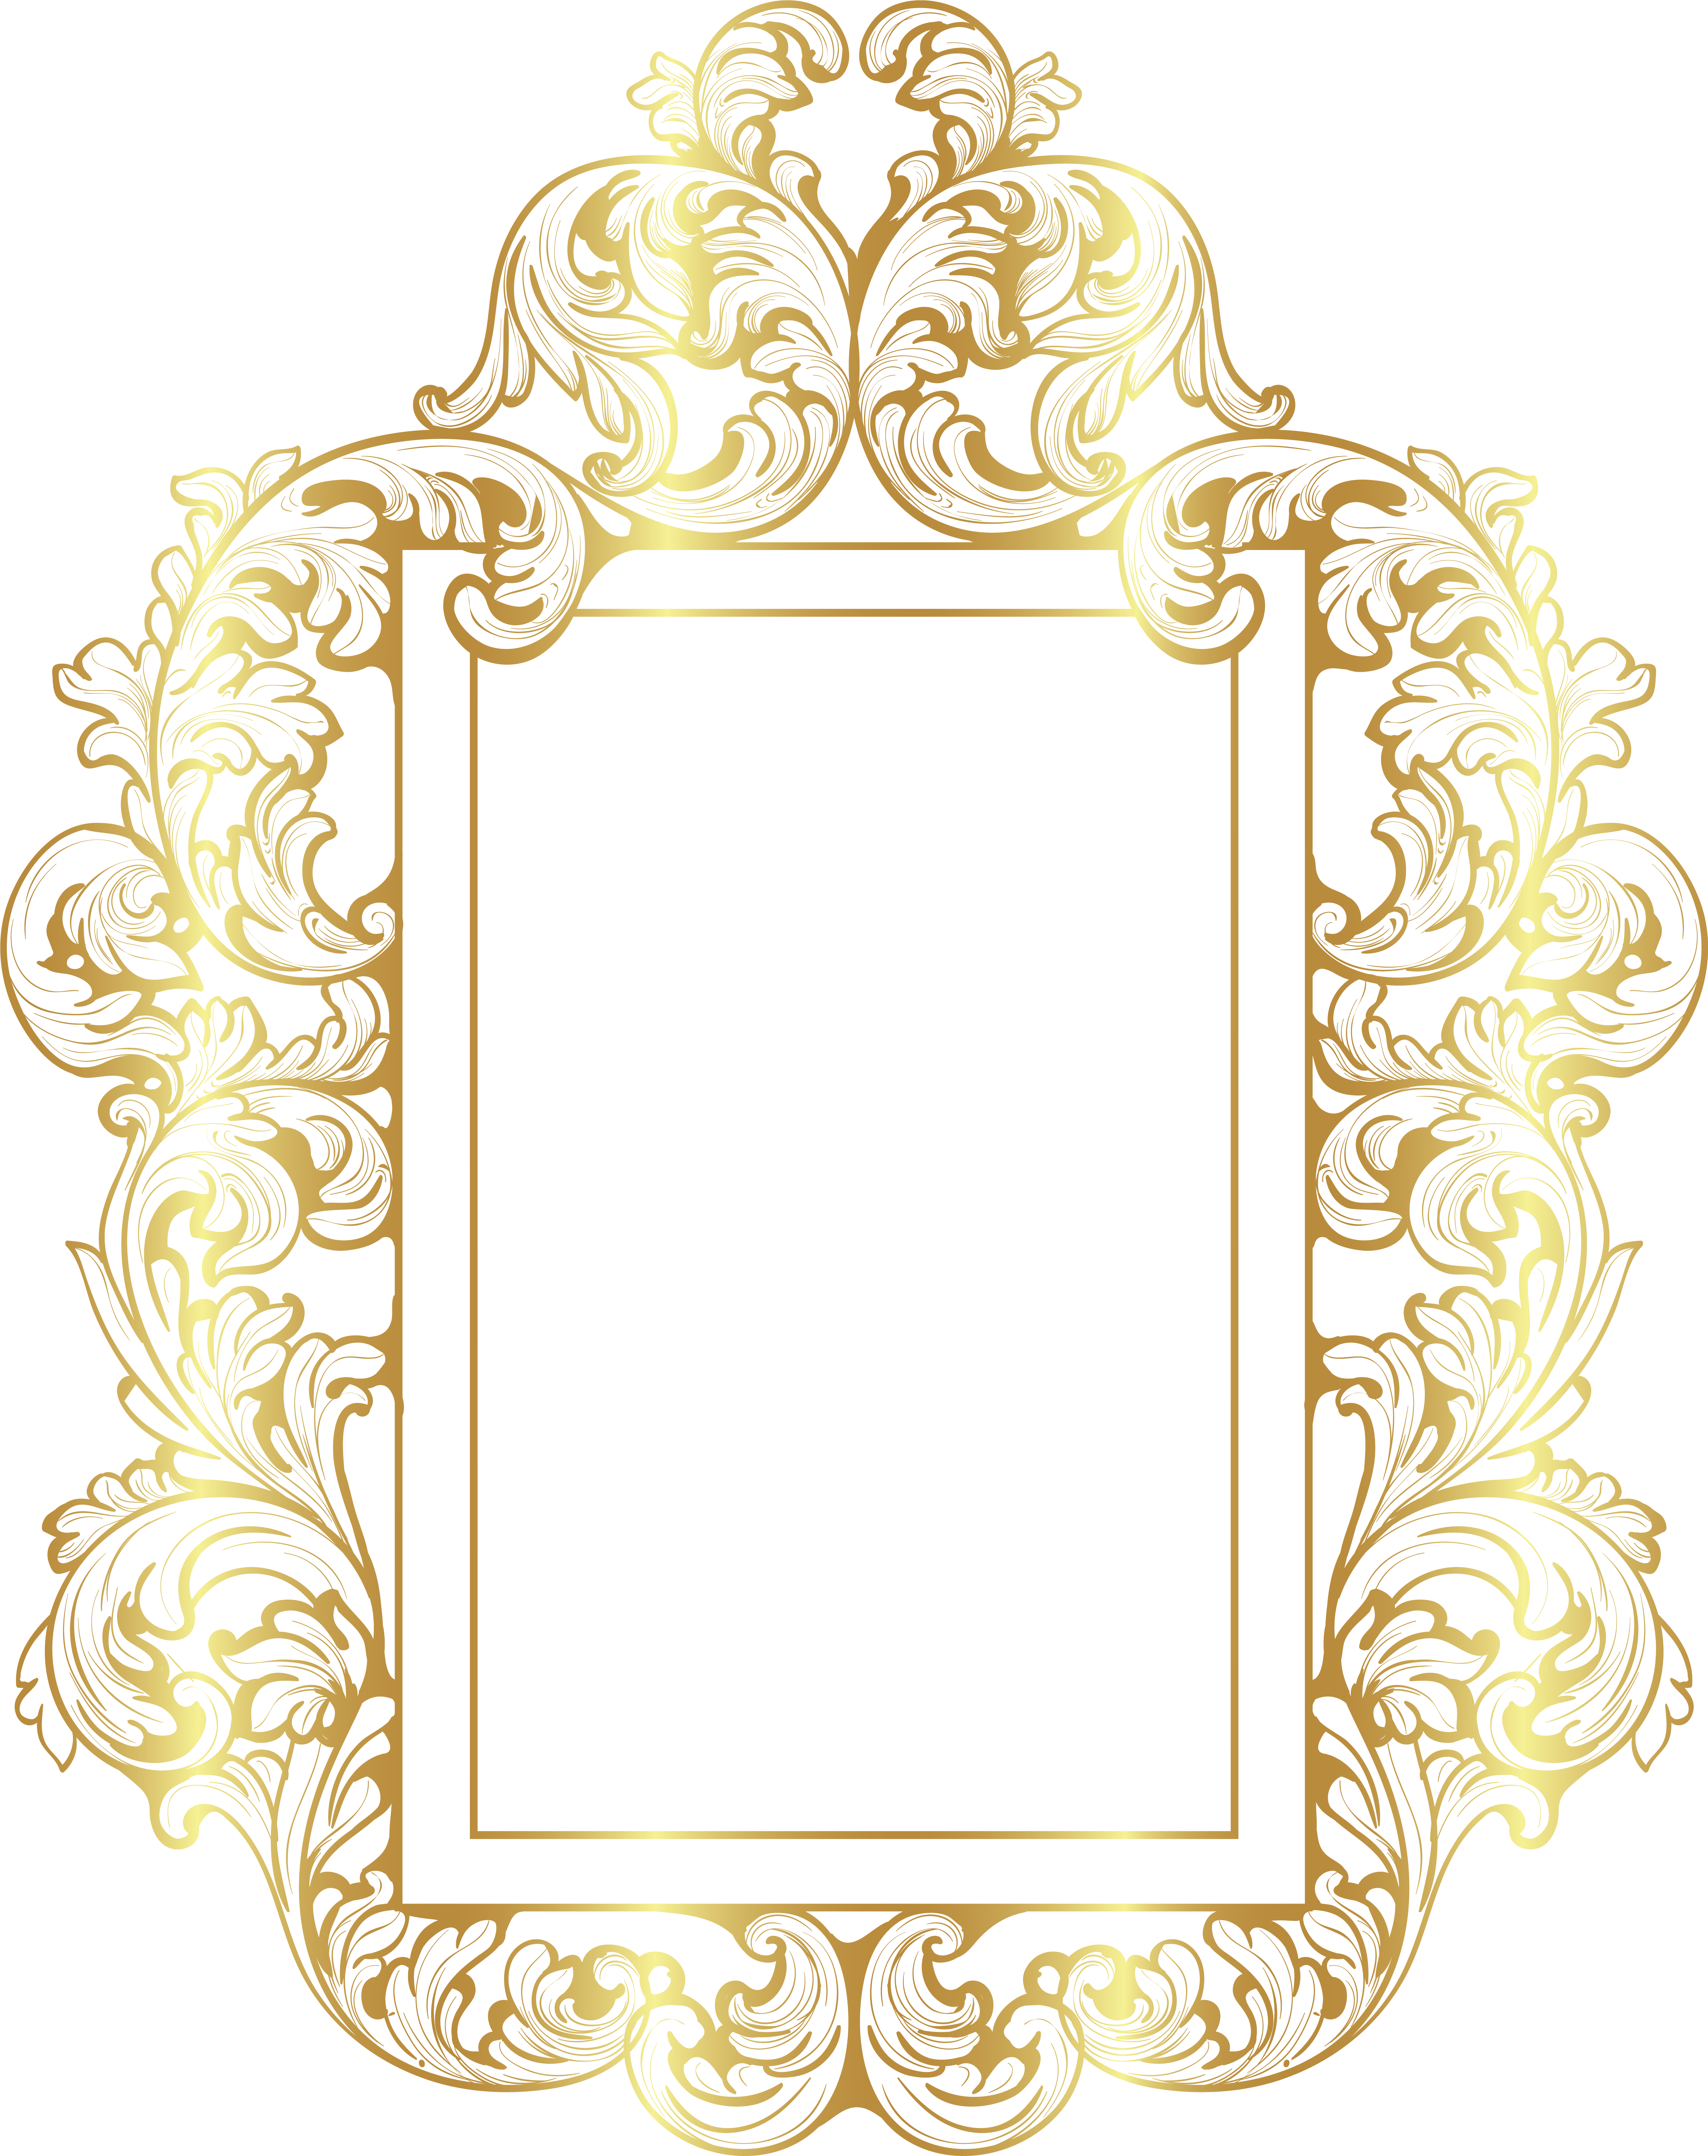 Decorative Gold Frame Border Clipart Image - Png Download (6363x8000), Png Download